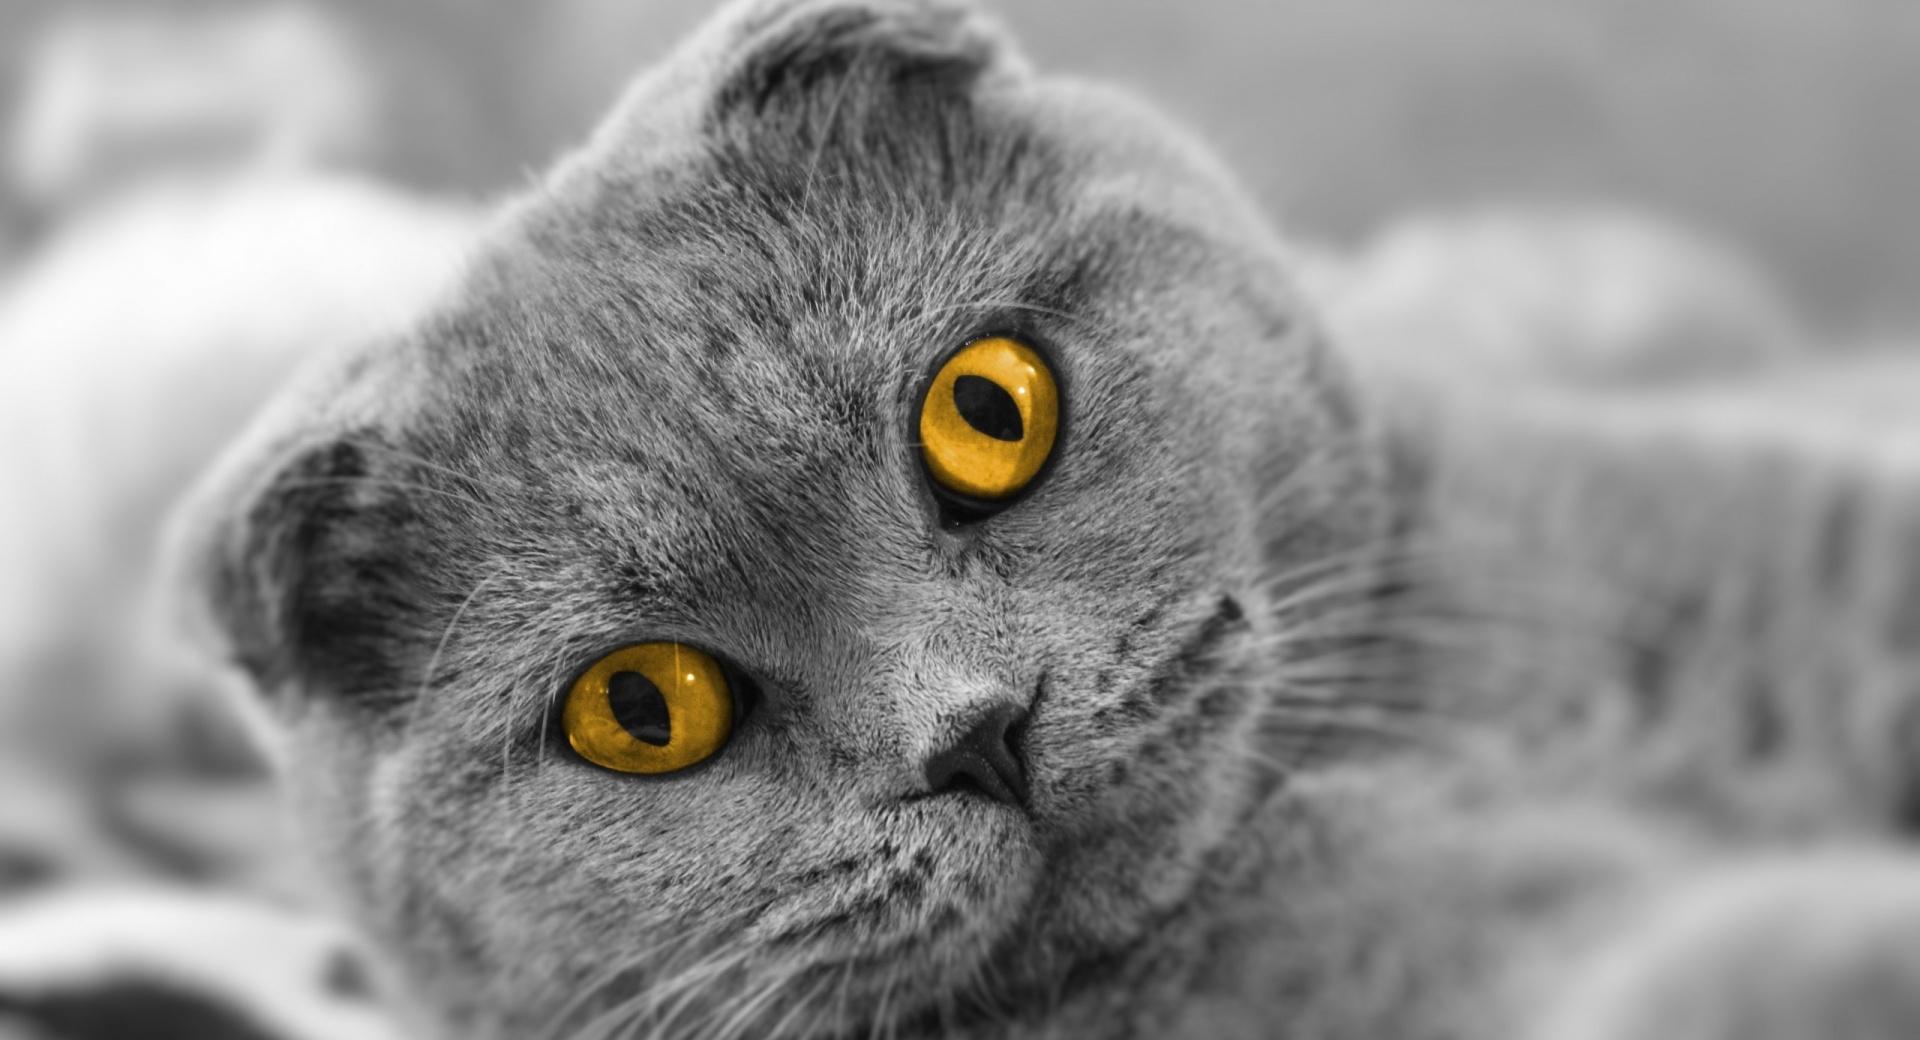 Scottish Fold Cute Cat at 1024 x 1024 iPad size wallpapers HD quality